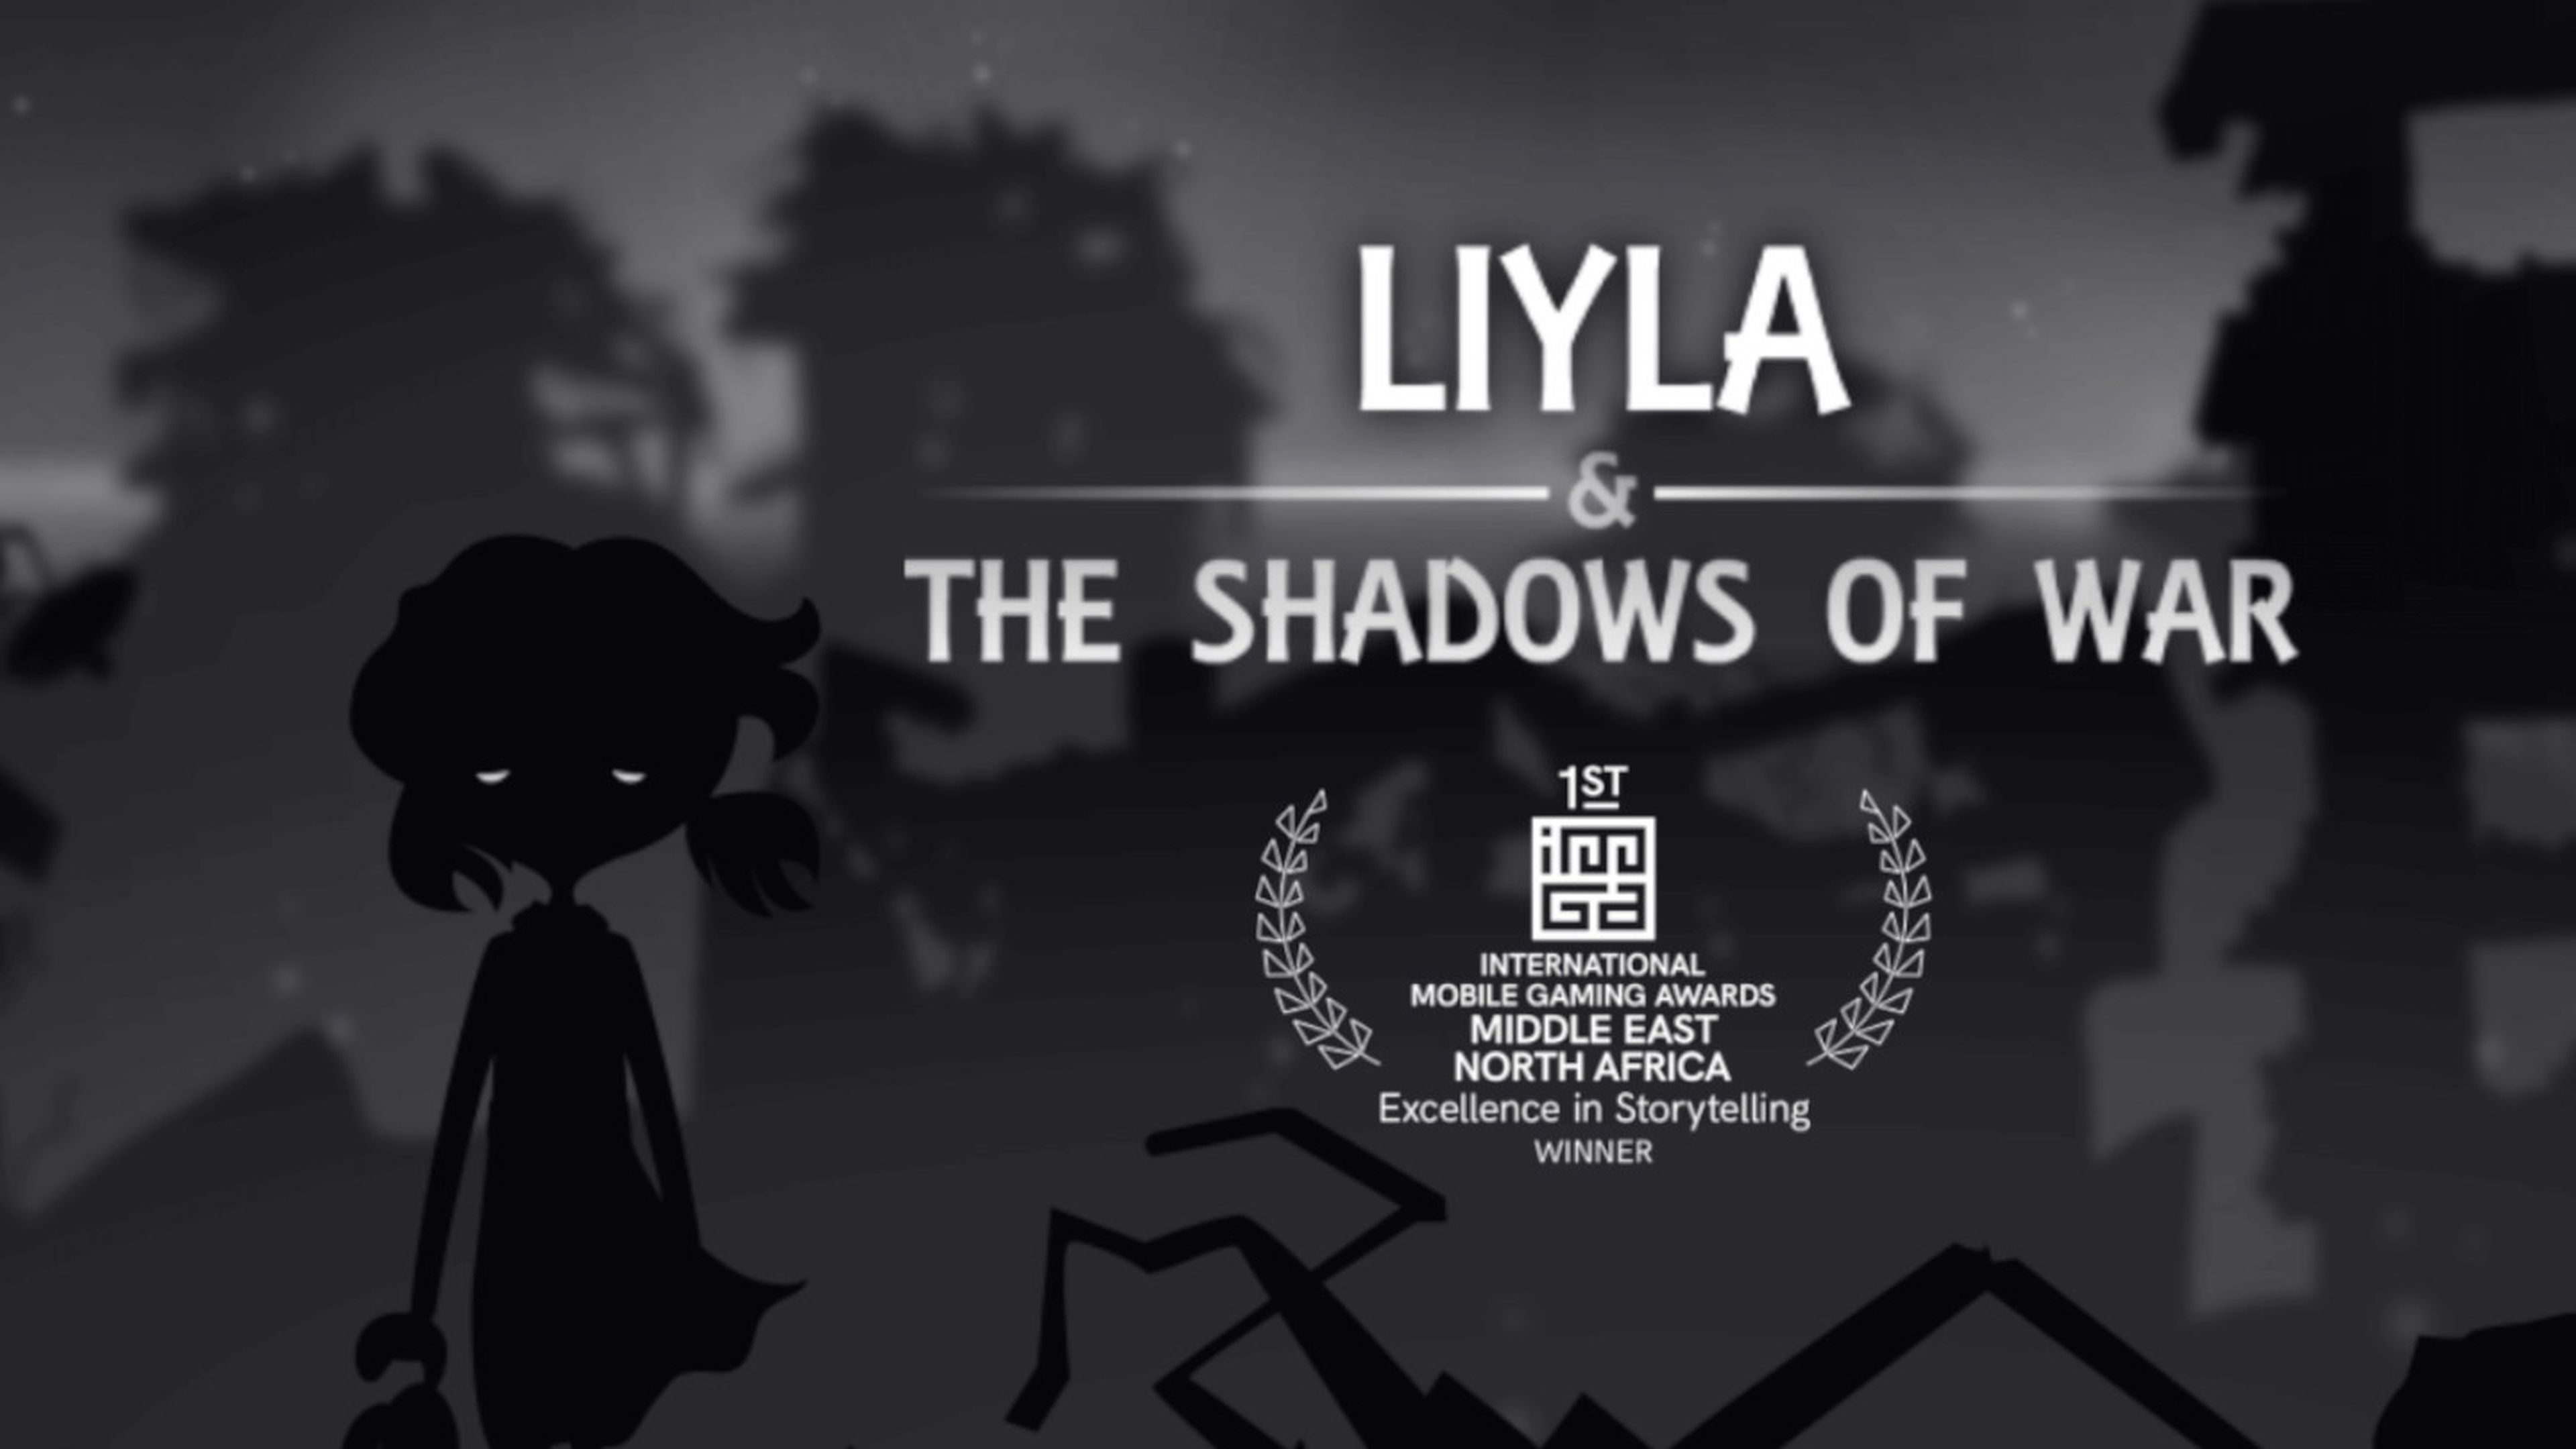 Liyla and the Shadows of War